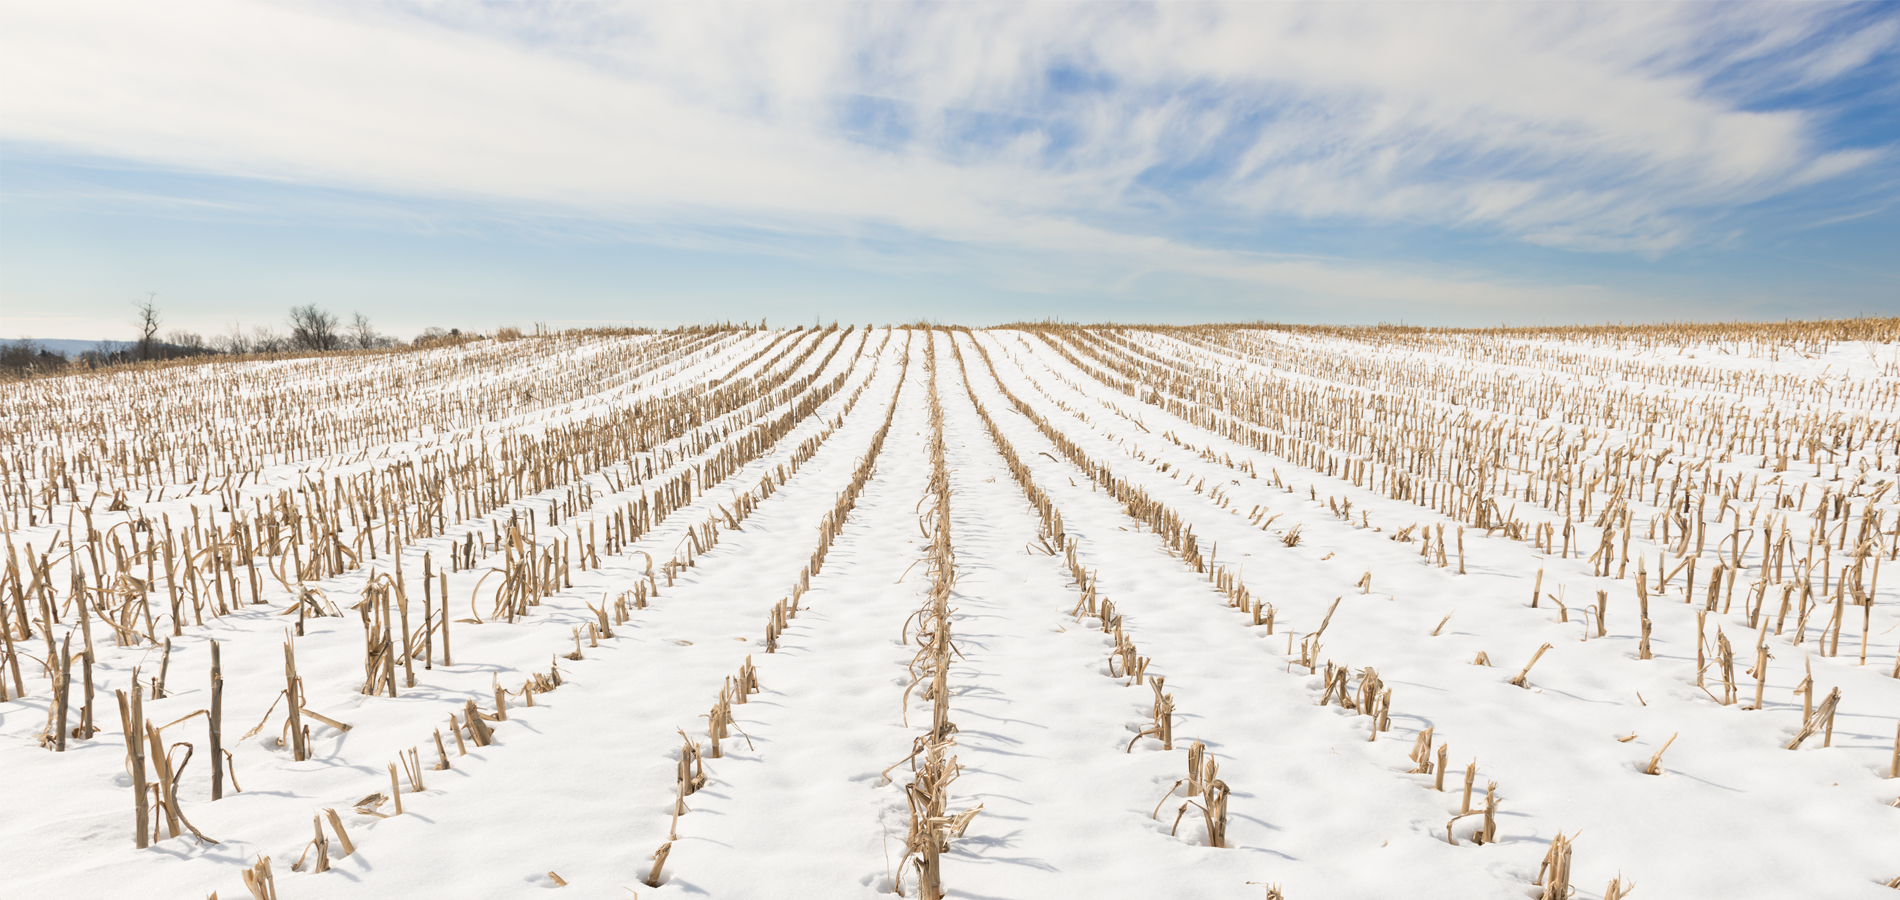 Snow-covered corn field